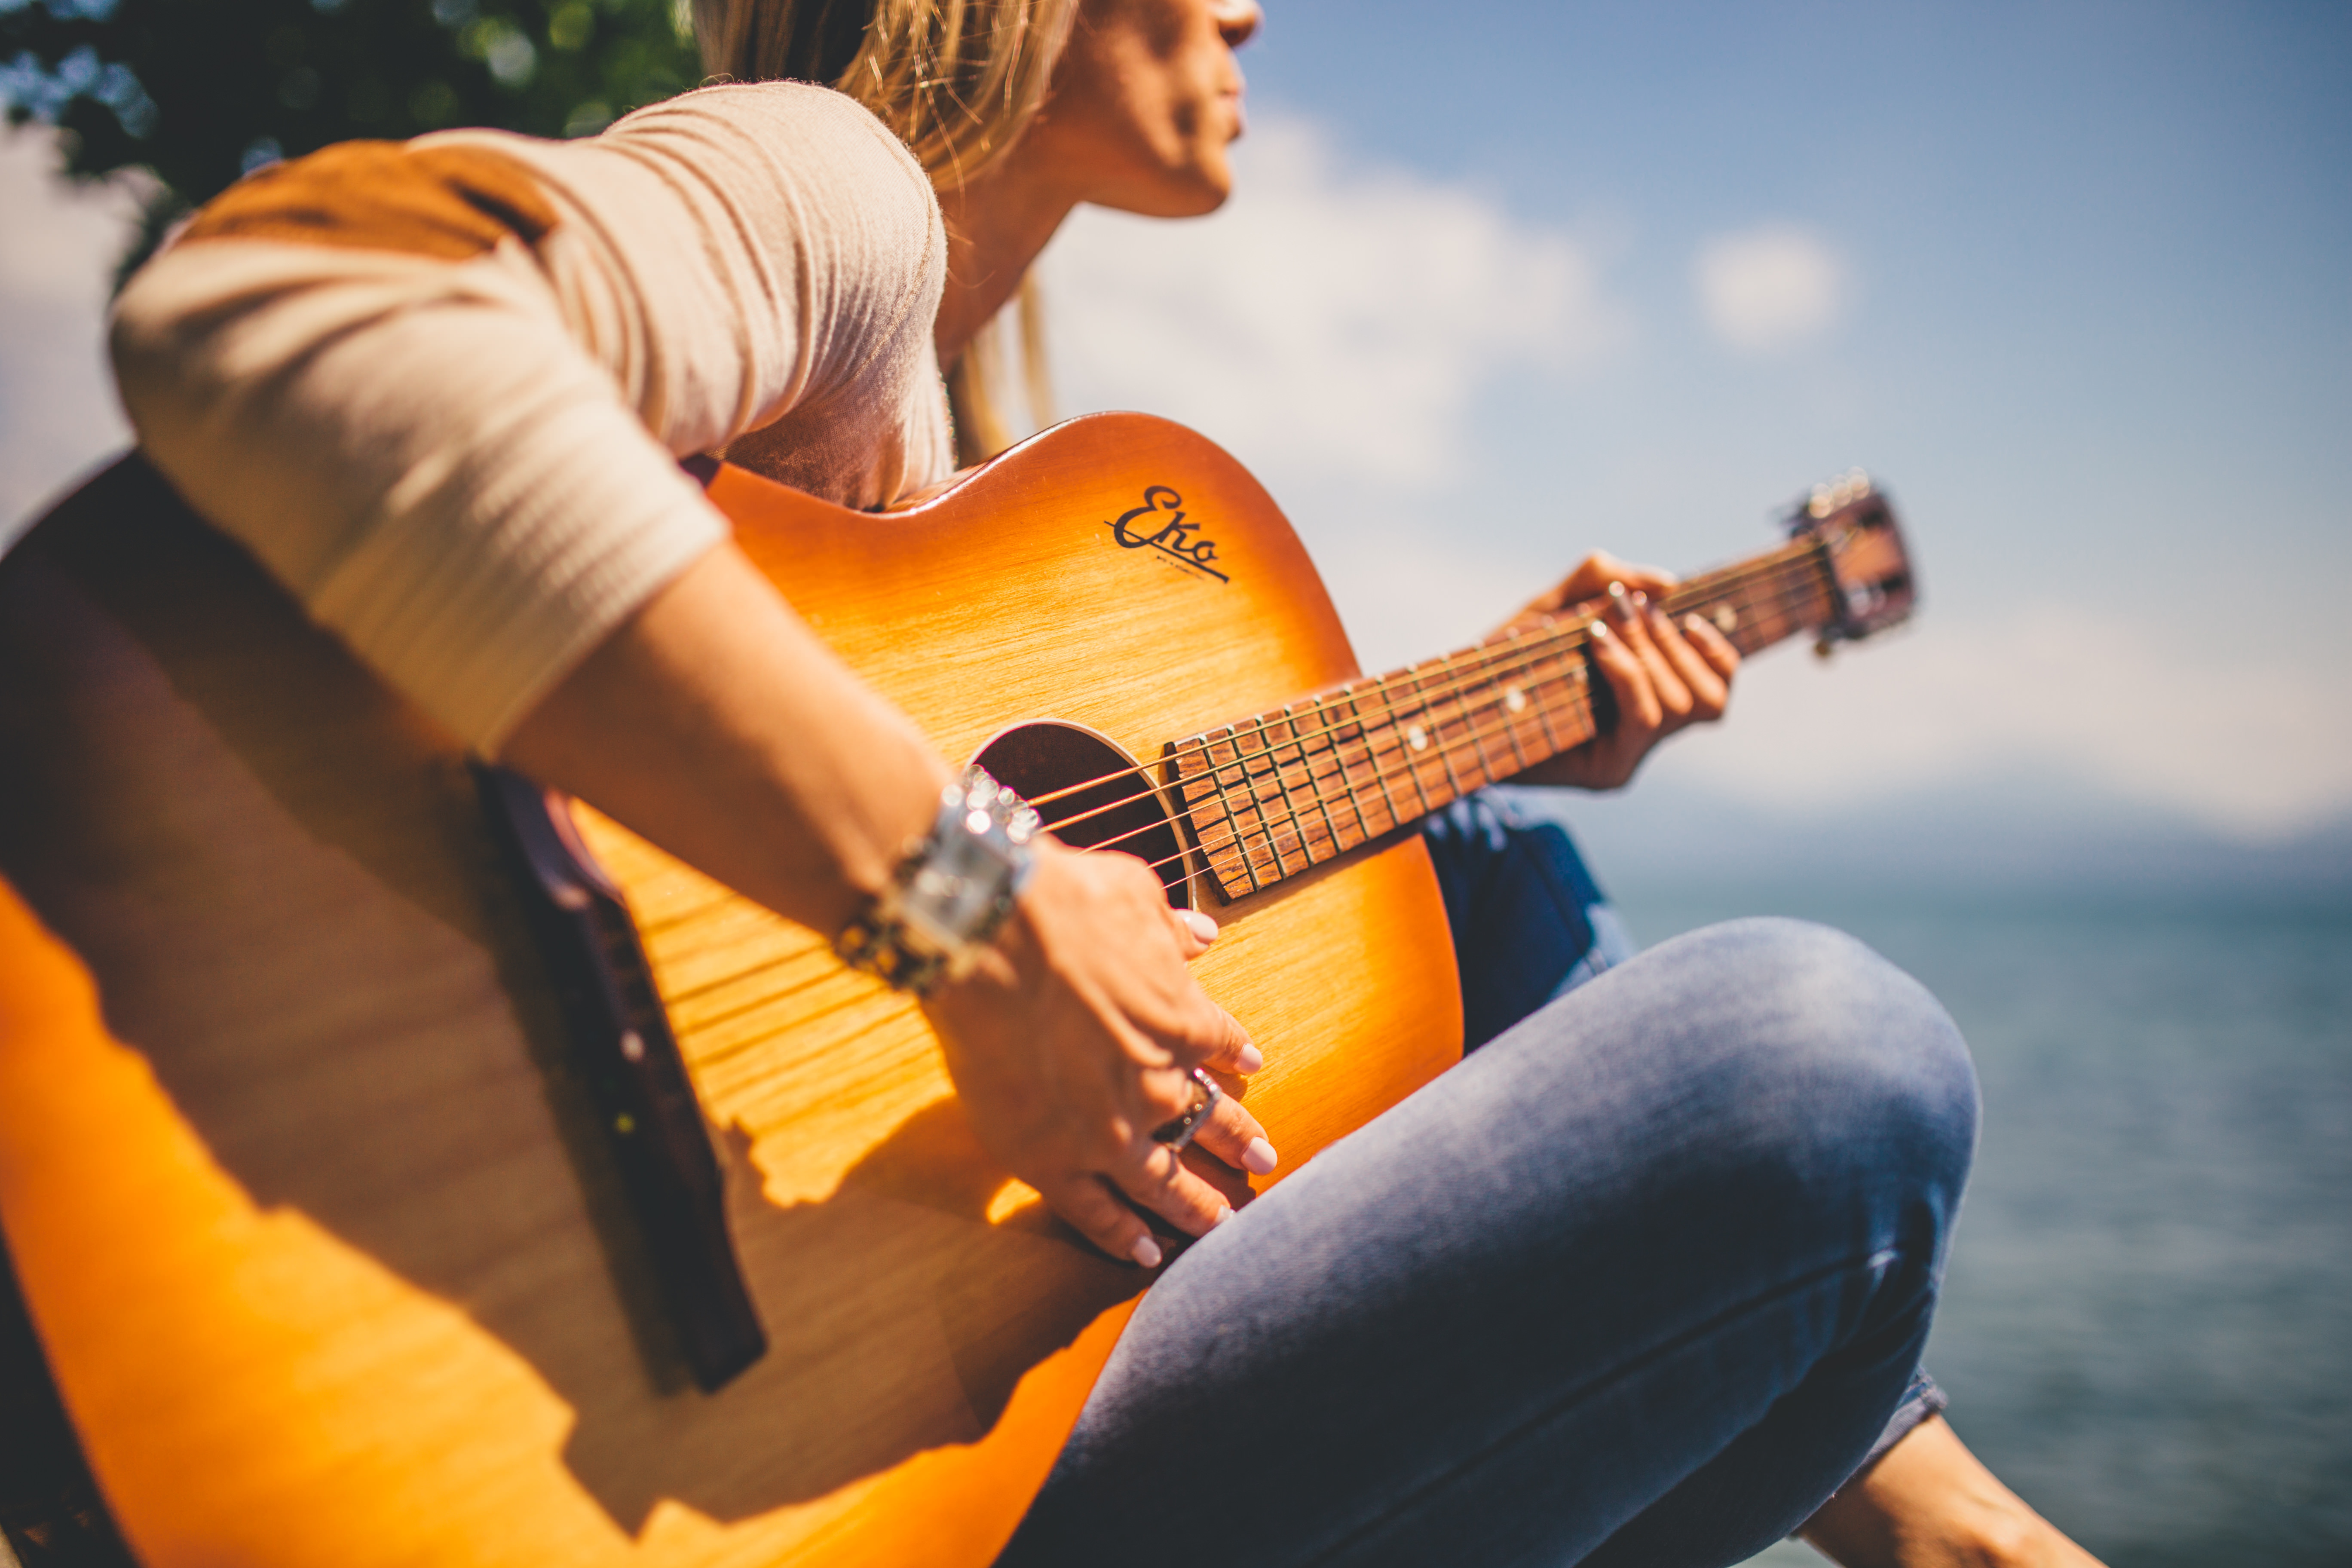 Woman playing guitar photo